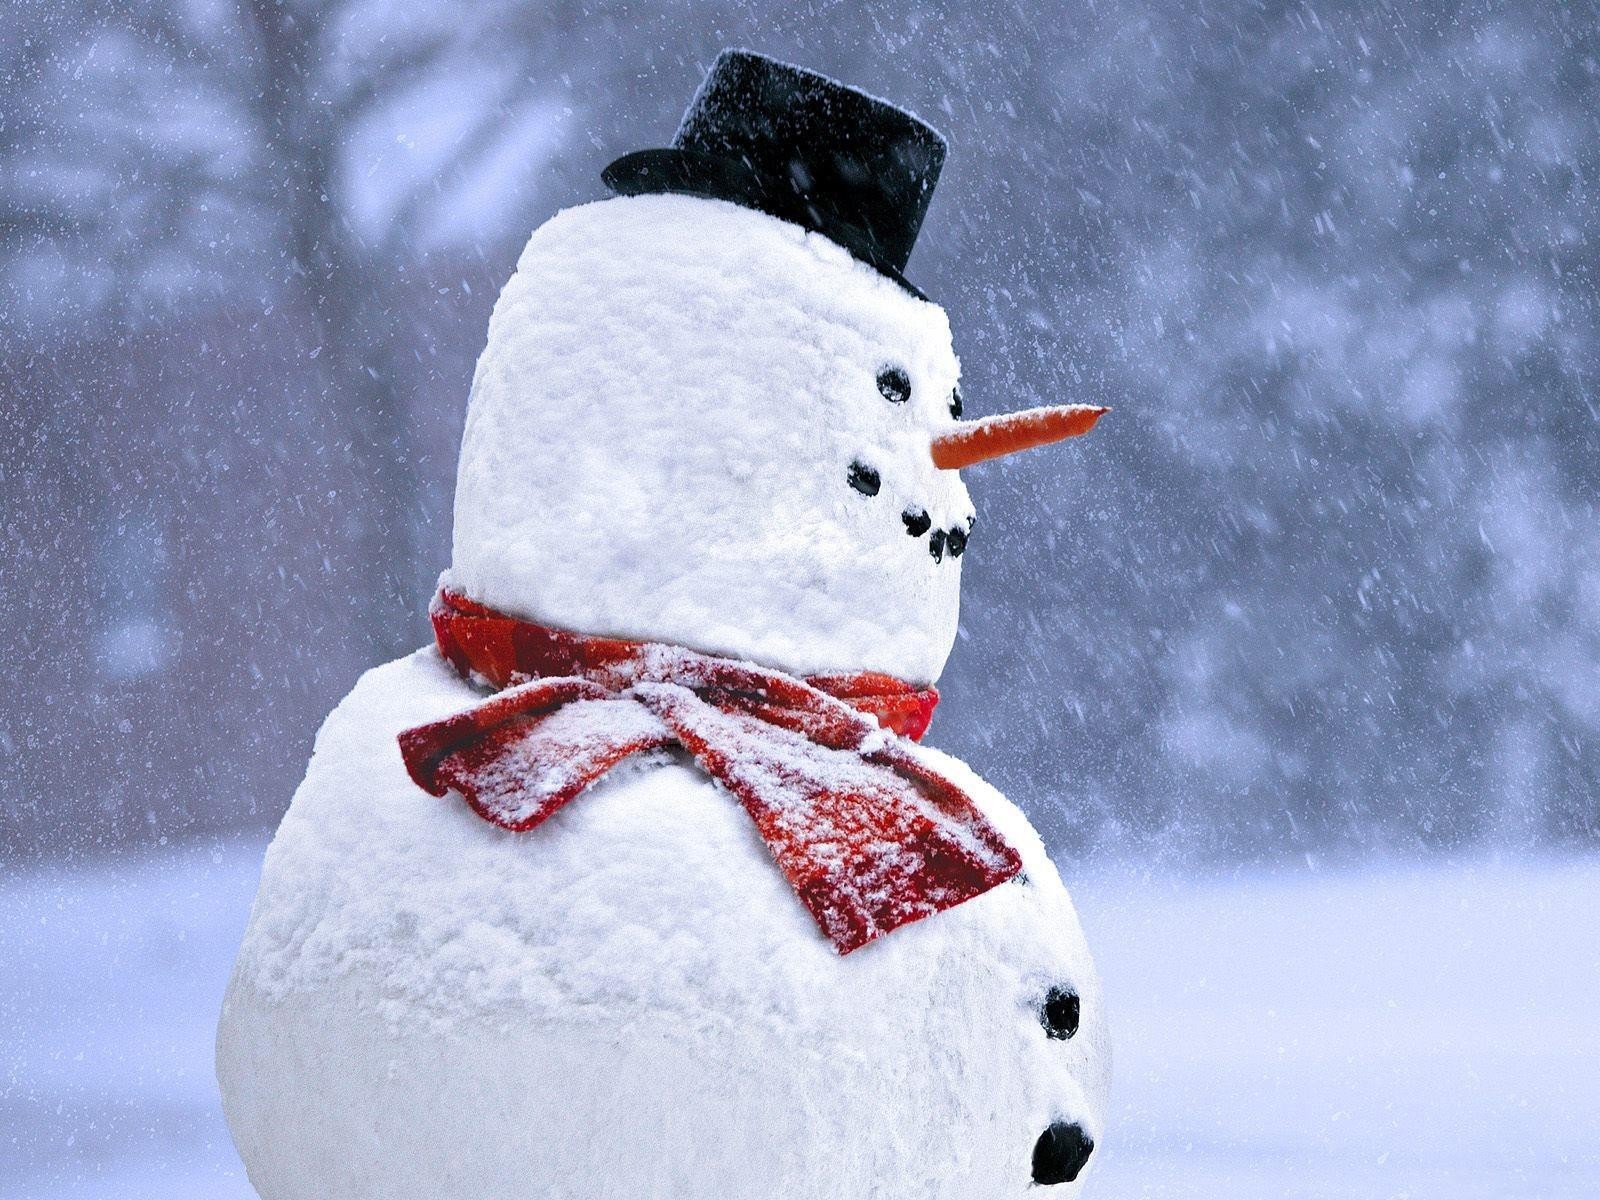 General 1600x1200 snow snowman winter carrots hat